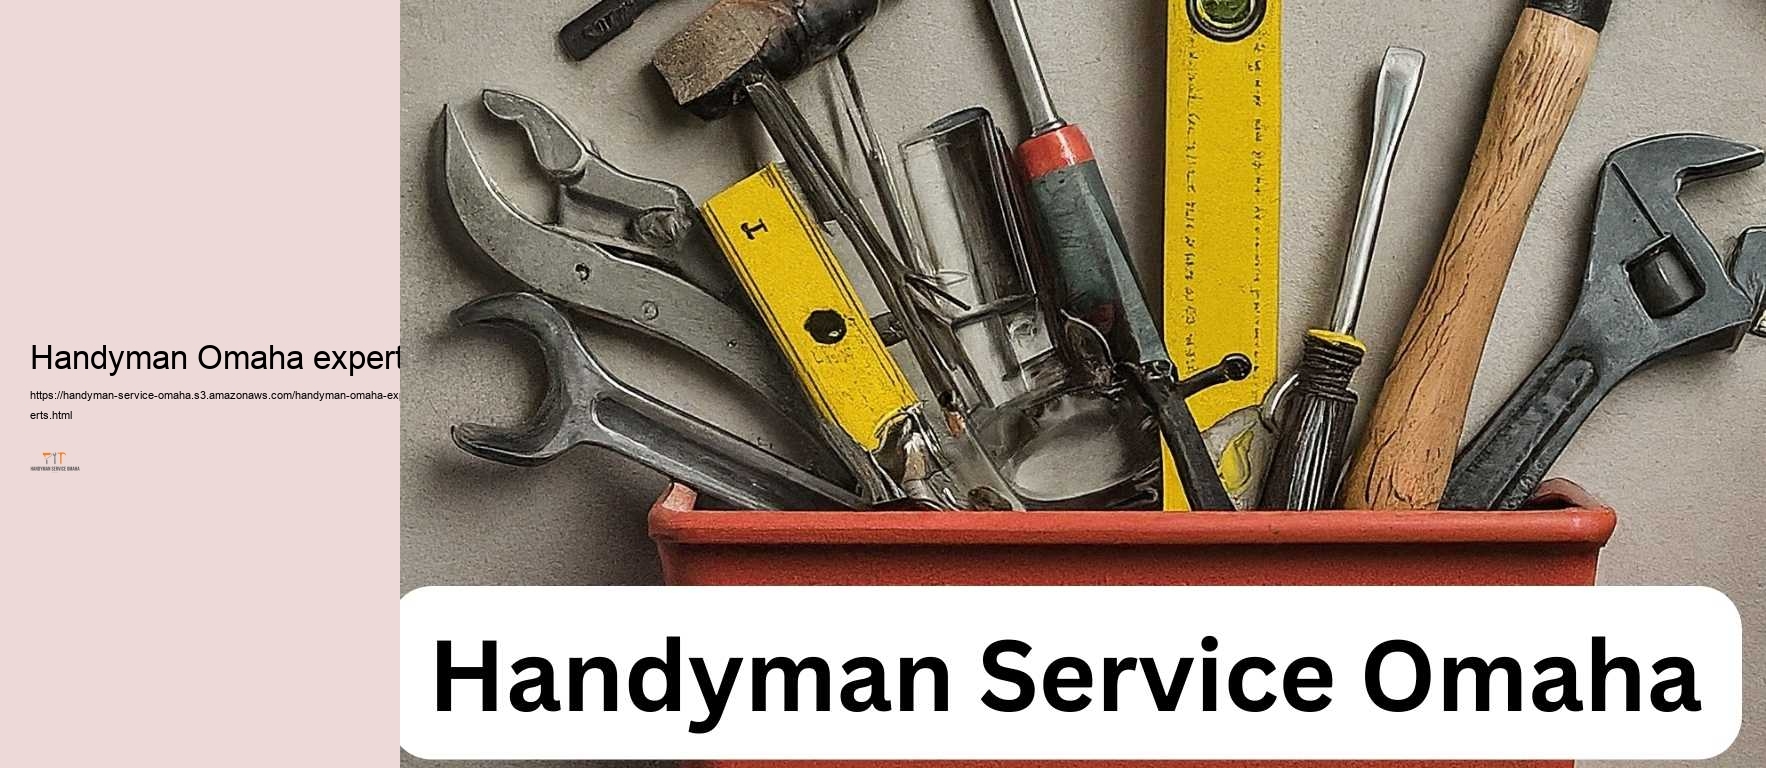 Handyman Omaha experts